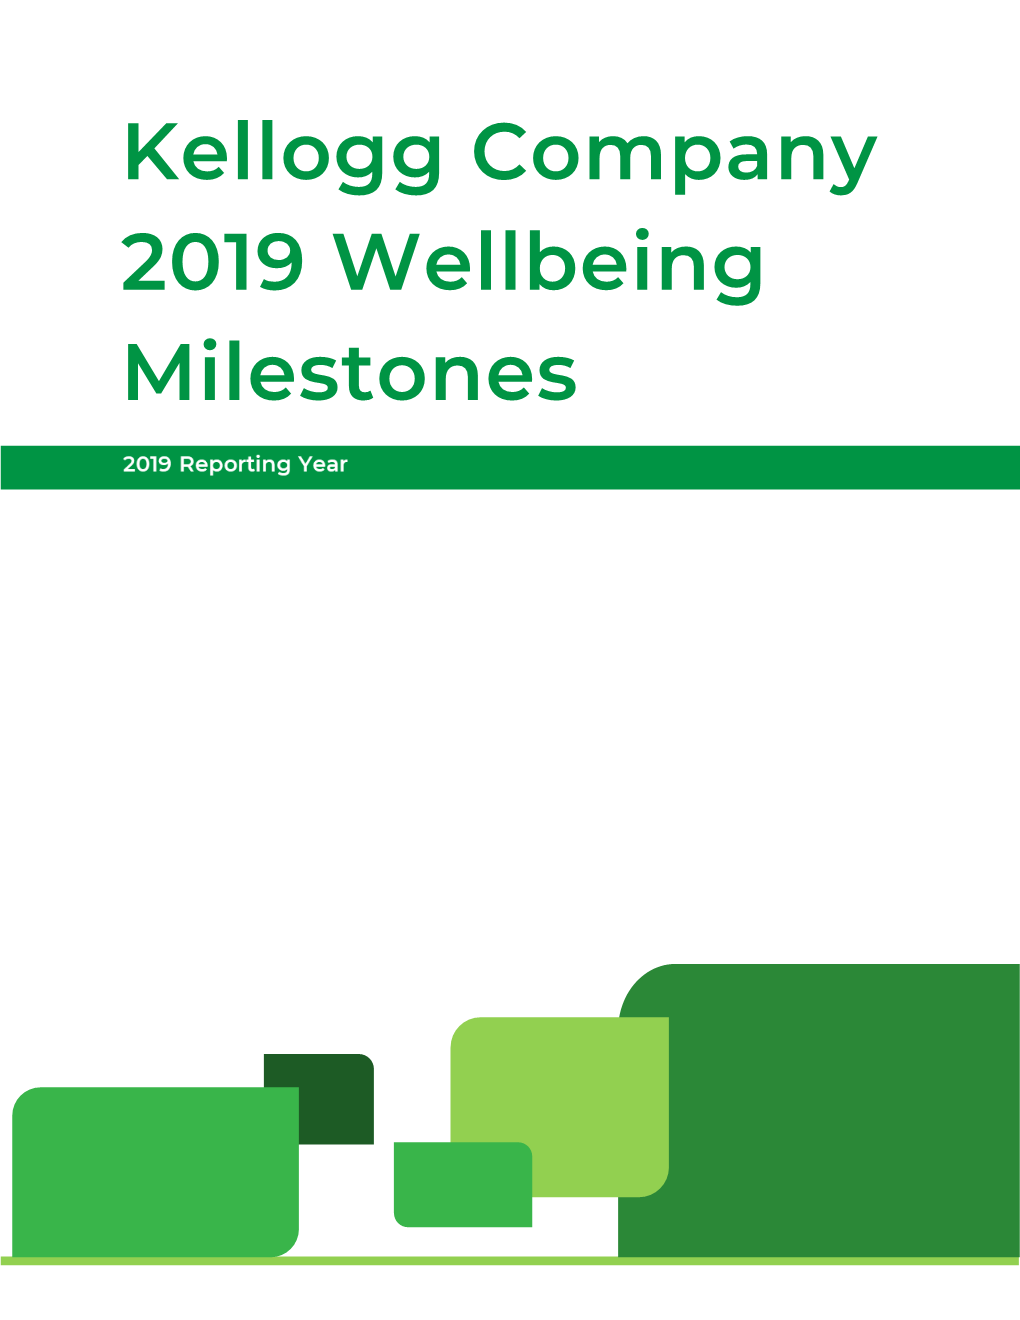 Kellogg Company 2019 Wellbeing Milestones